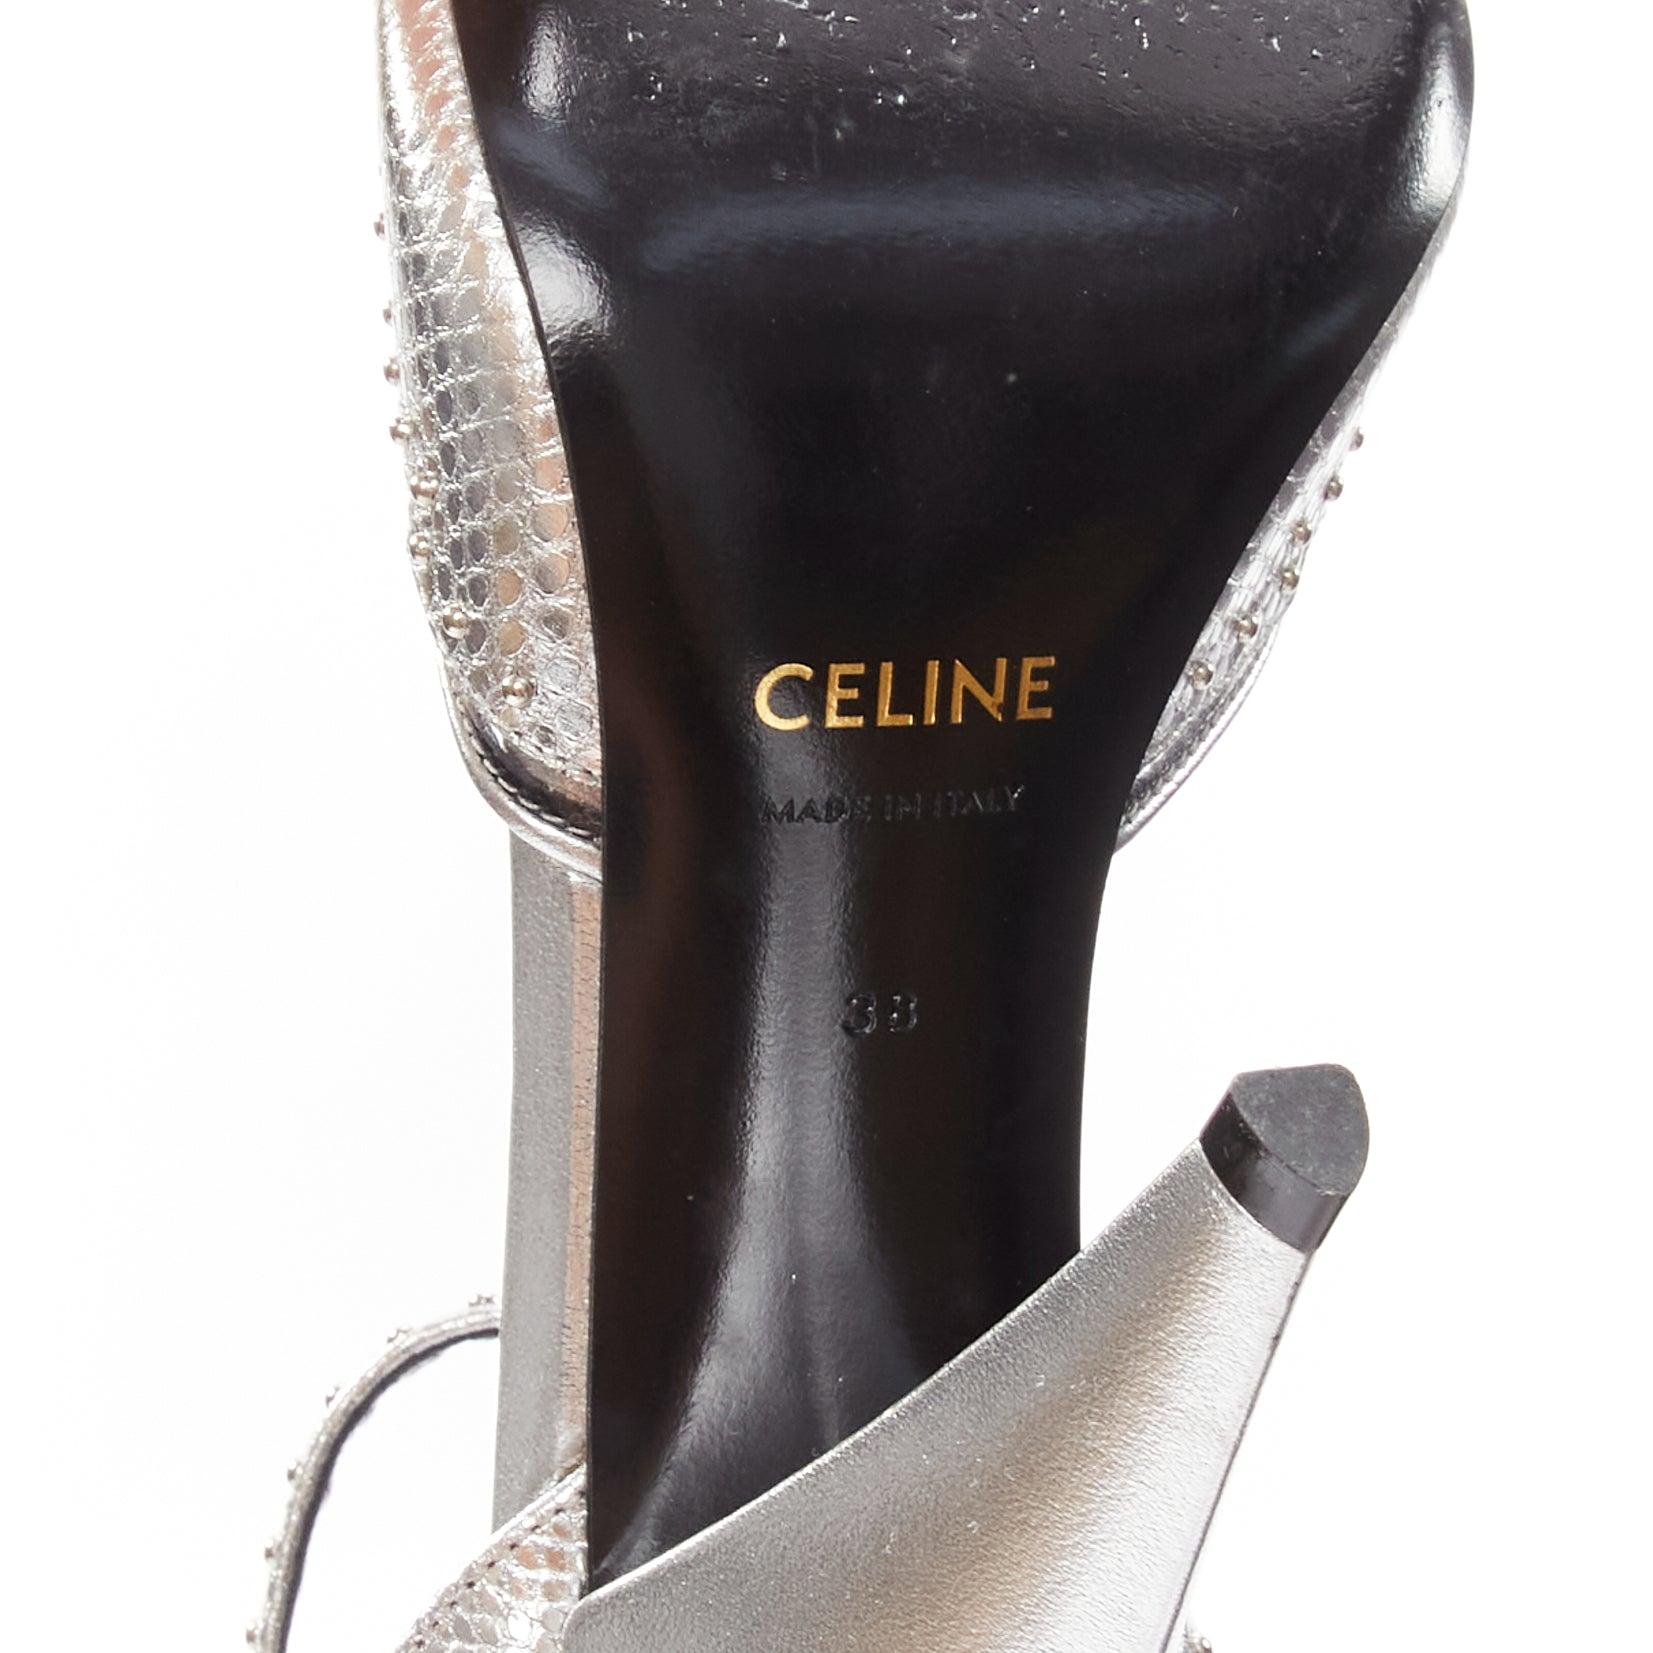 CELINE Hedi Slimane silver leather PVC conical heels EU38 For Sale 6